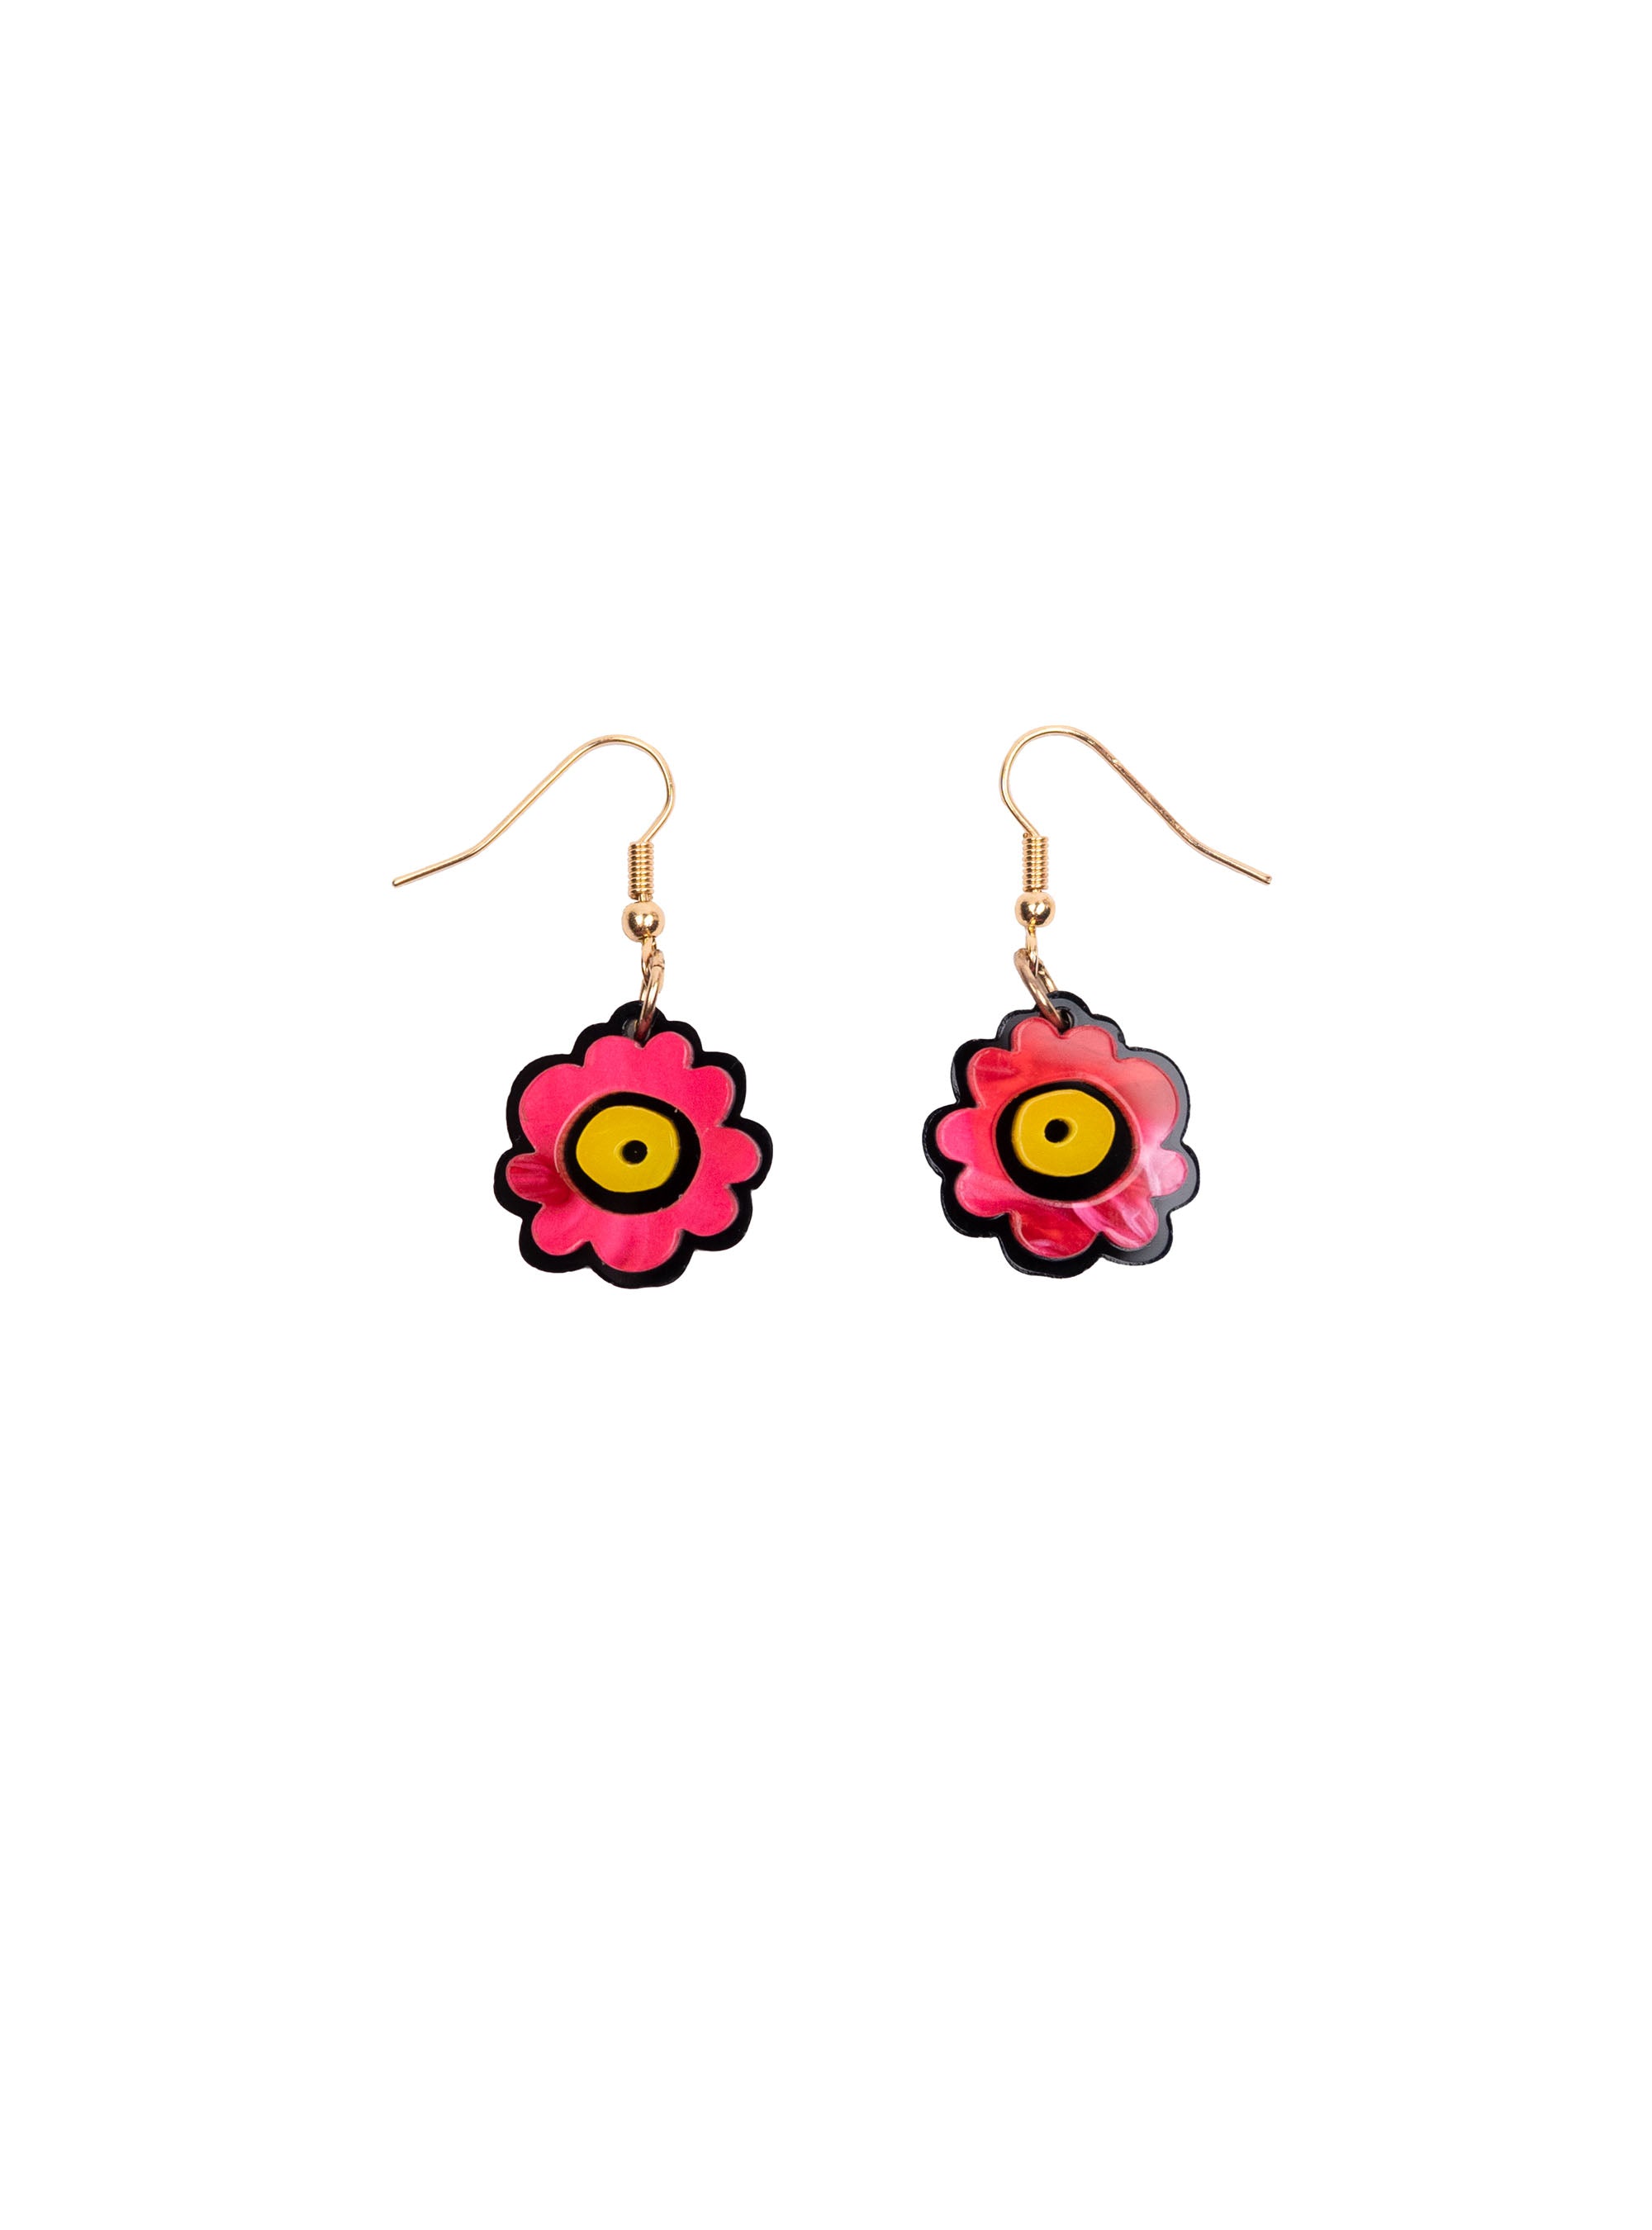 Frida Kahlo Floral Earrings